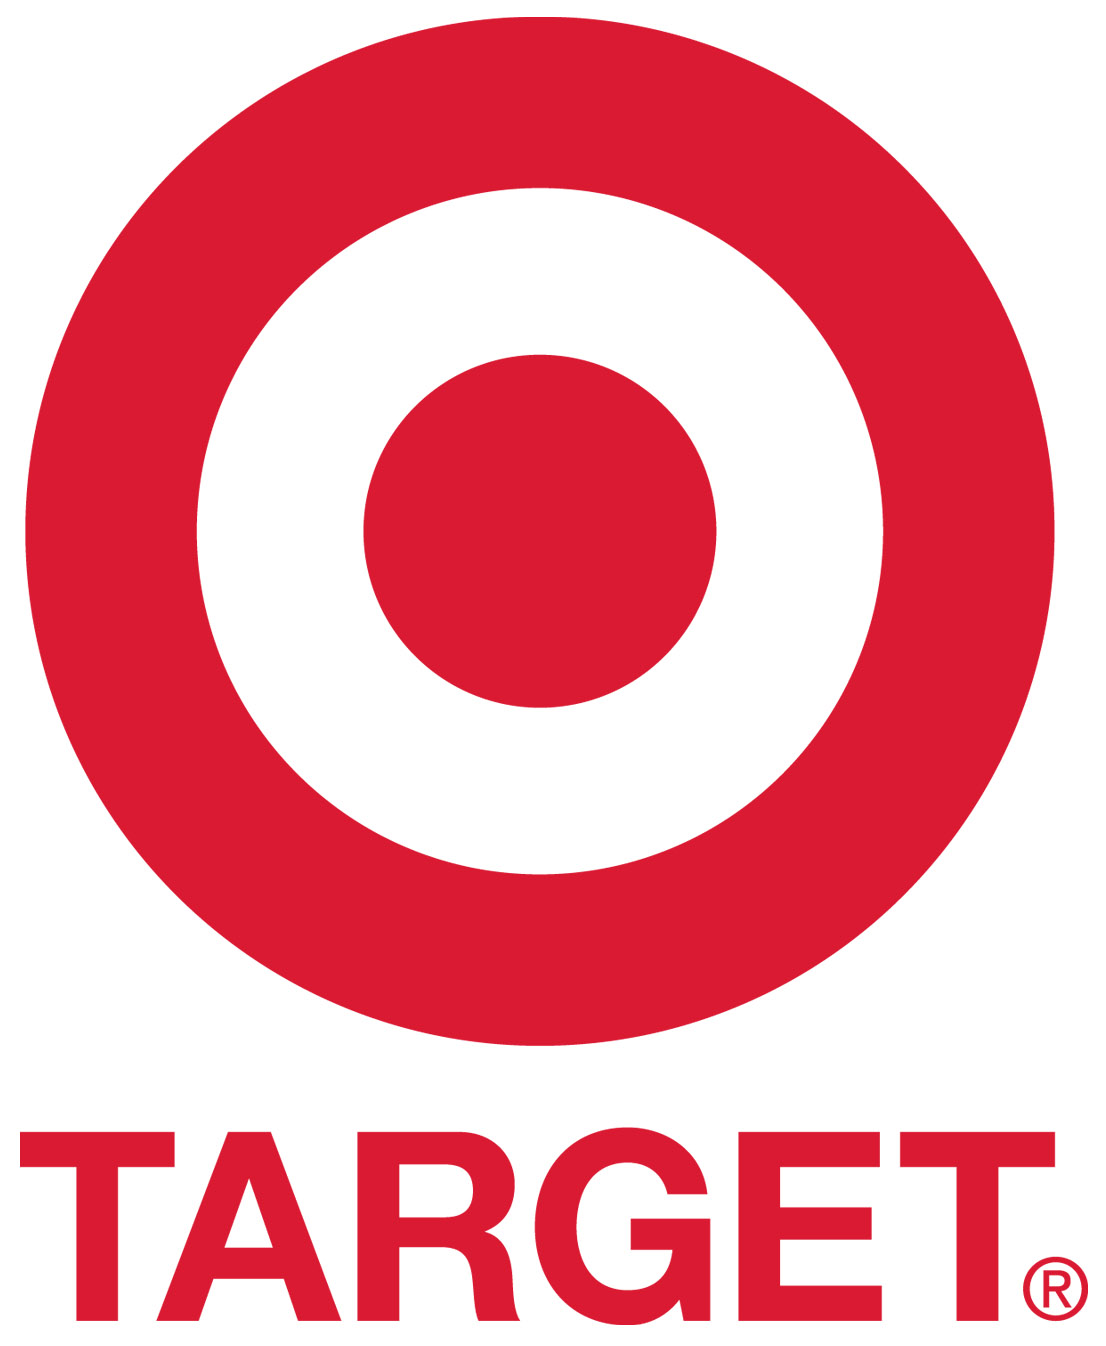 ... happier target worth extra bucks shop targets years Target Store dog